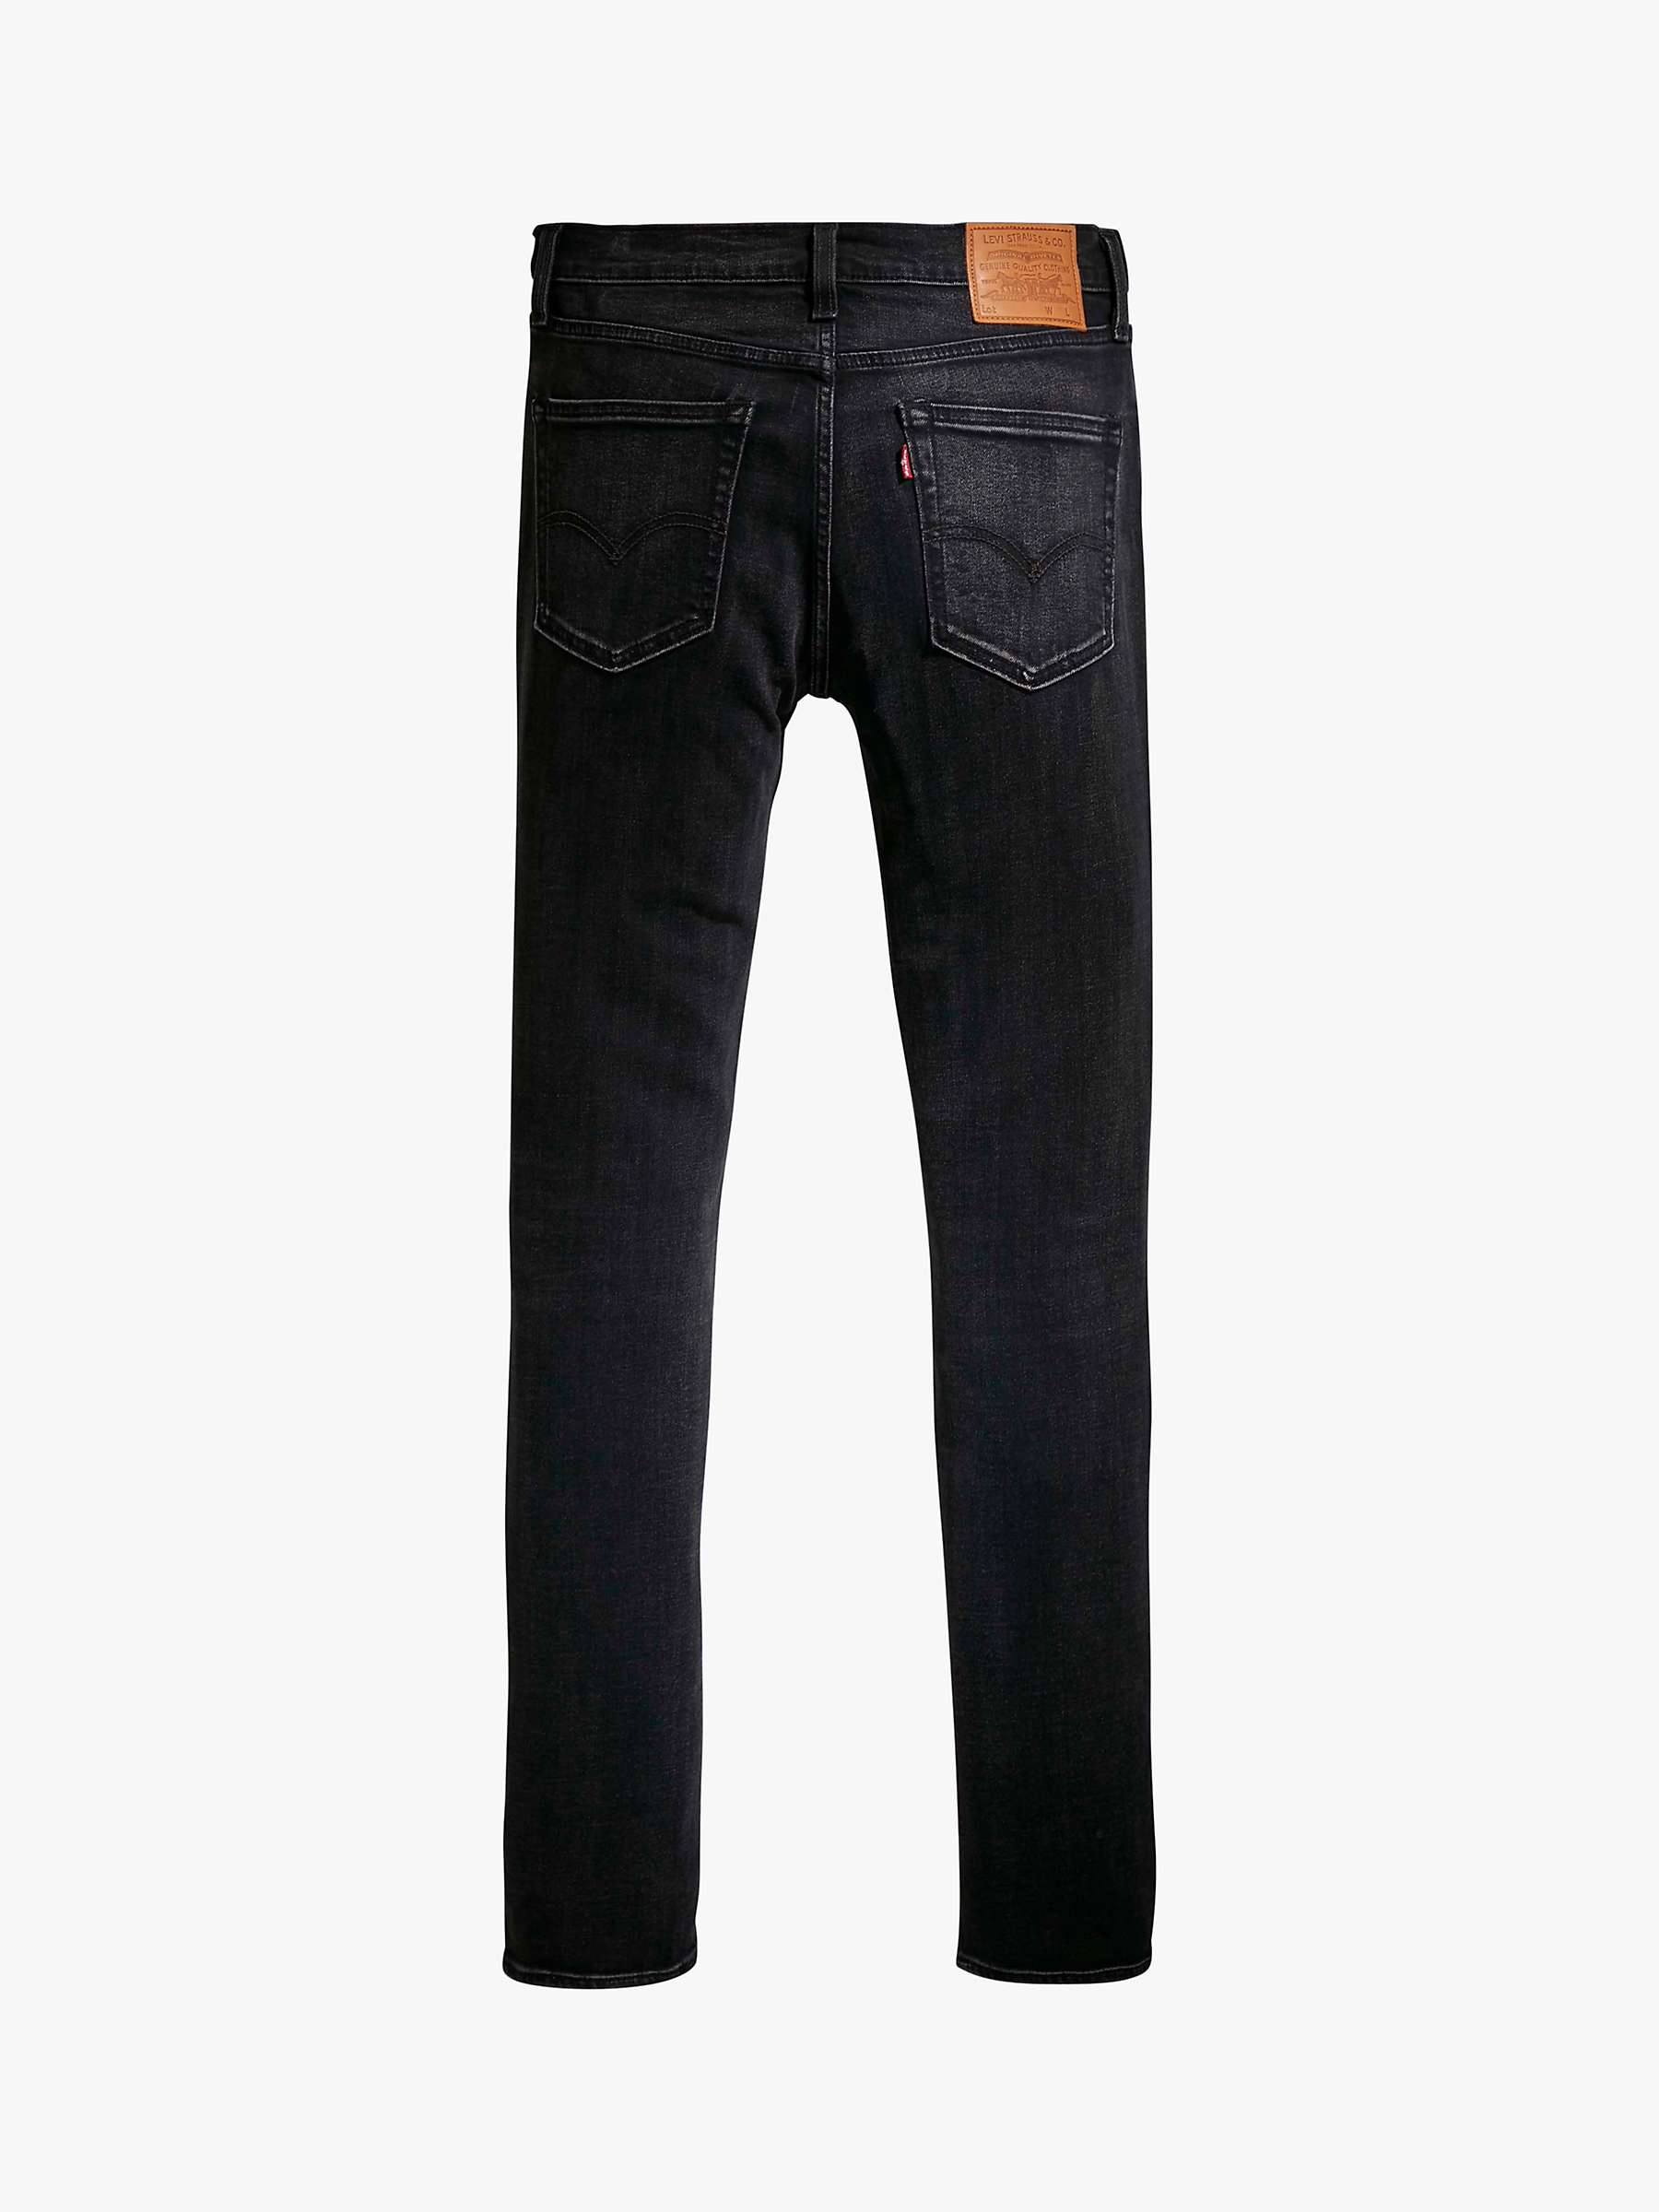 Levi's 511 Slim Fit Jeans, Caboose at John Lewis & Partners